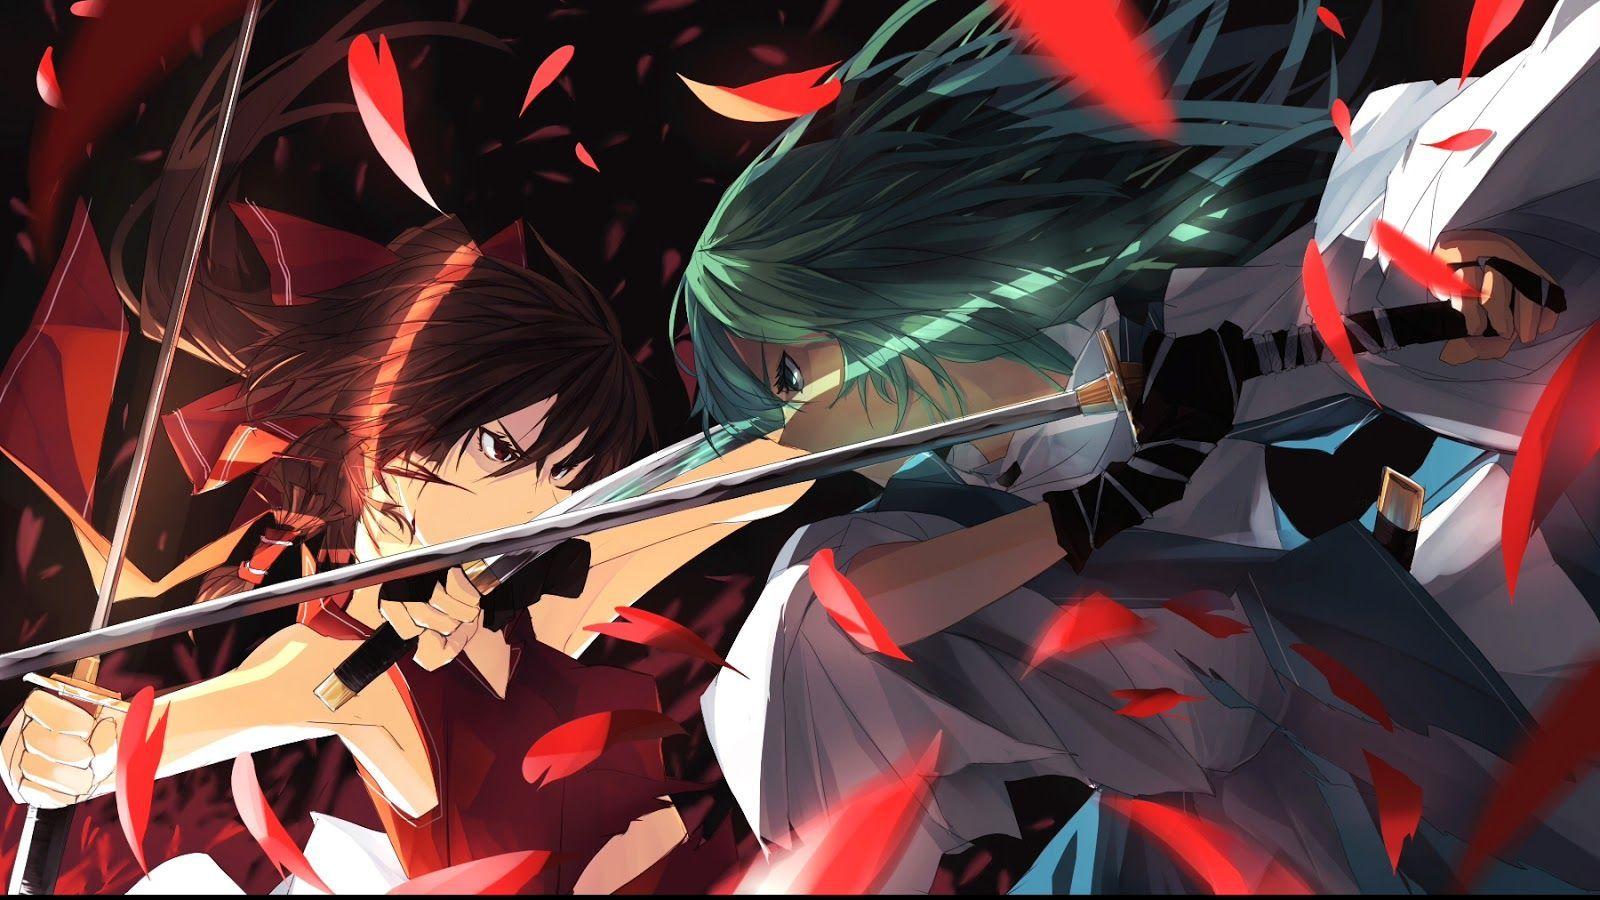 Anime War Fighting Battleground Background Stock Illustration 1696332025   Shutterstock